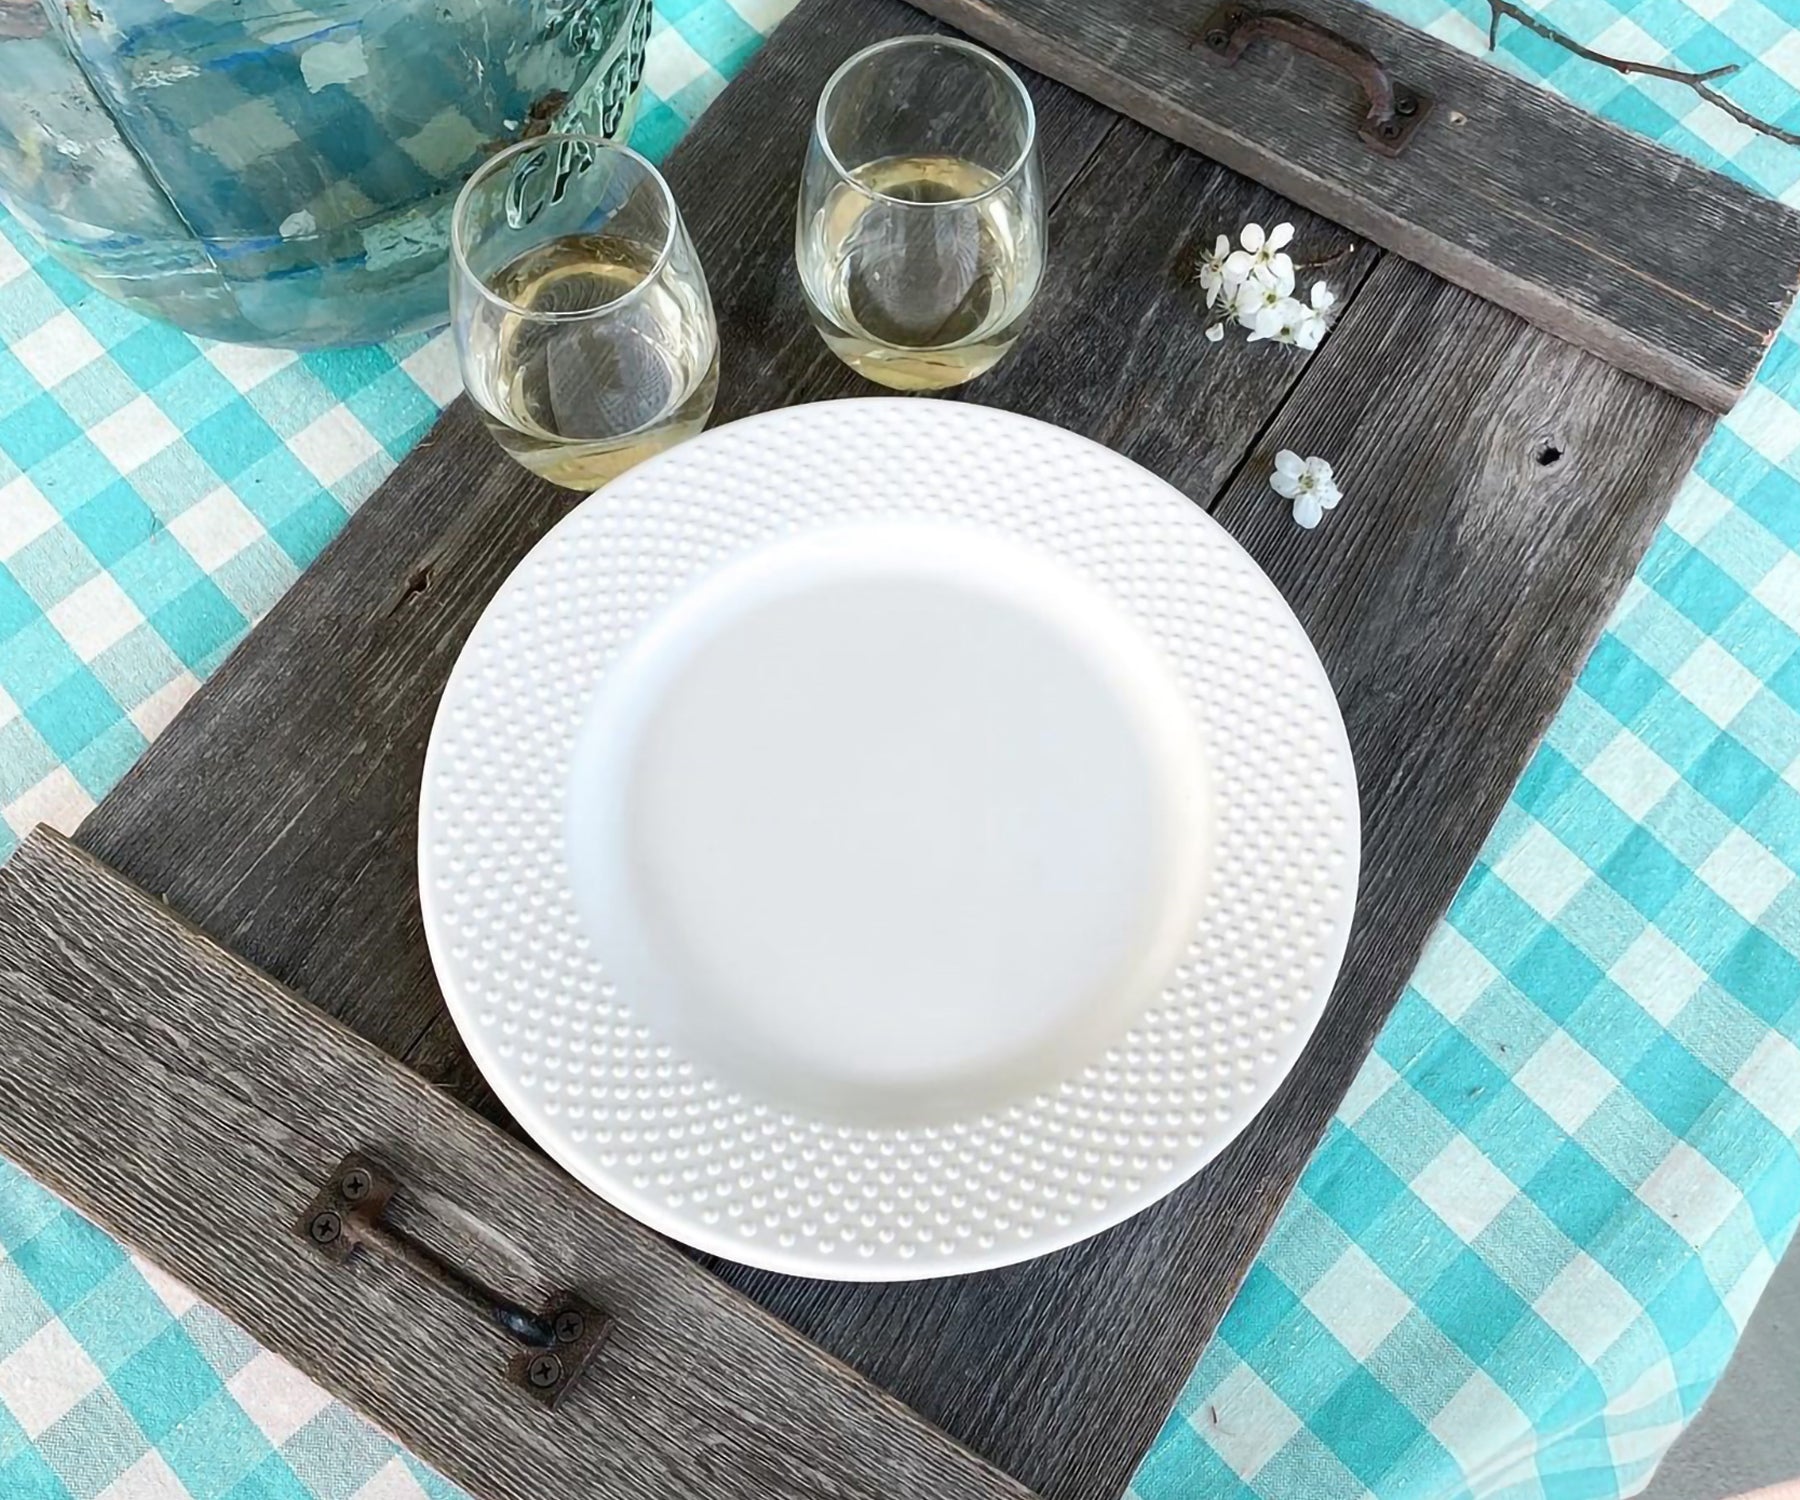 Aqua Blue and White Buffalo Check Tablecloth - Coastal Dining Vibes